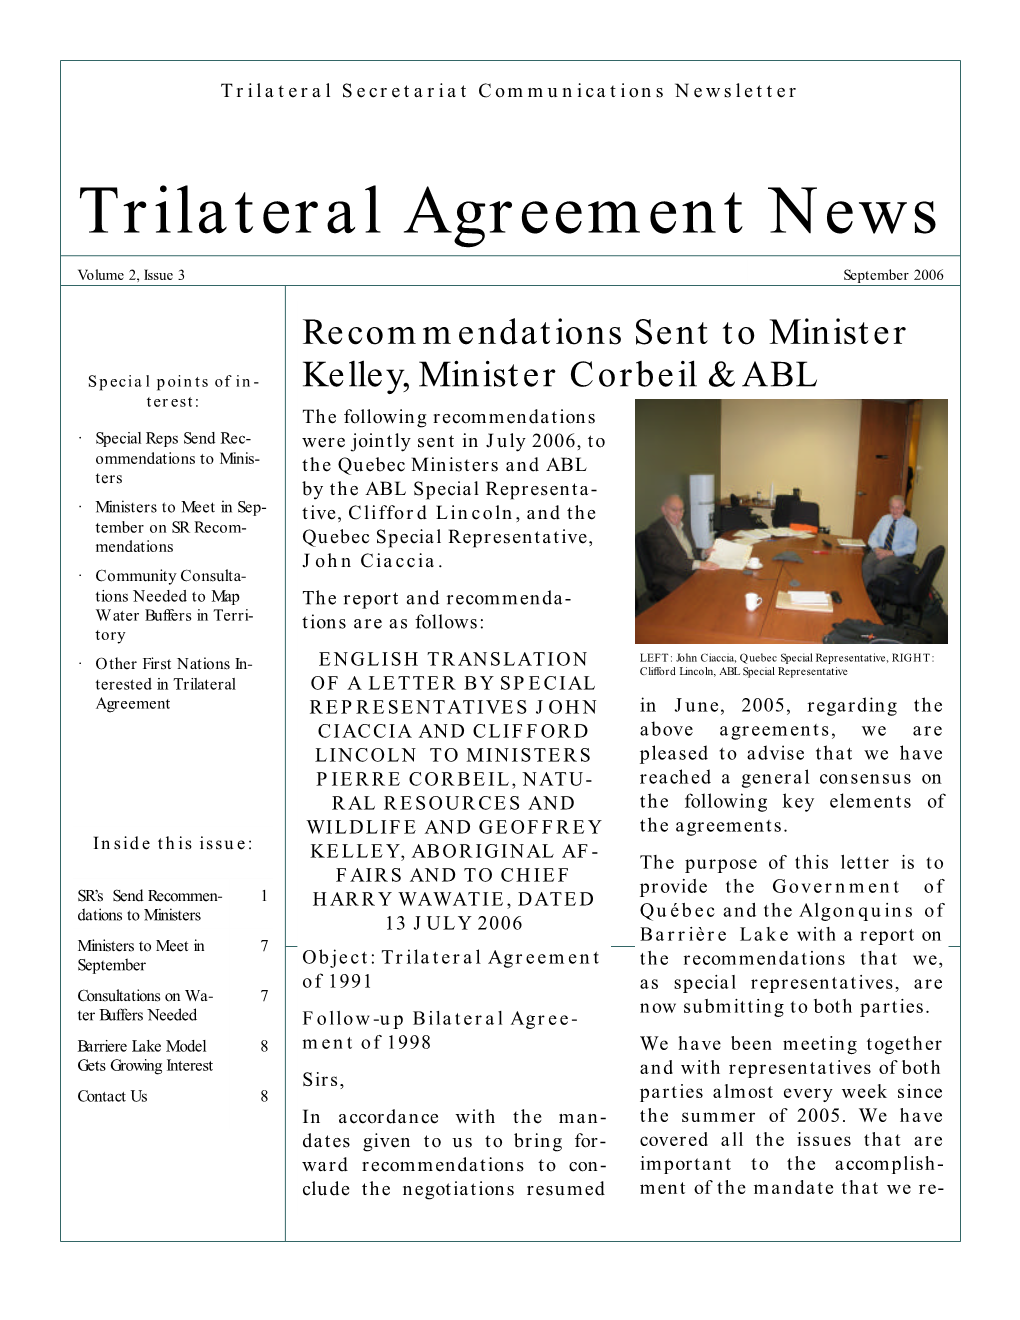 Bilateral Agreement, 1998